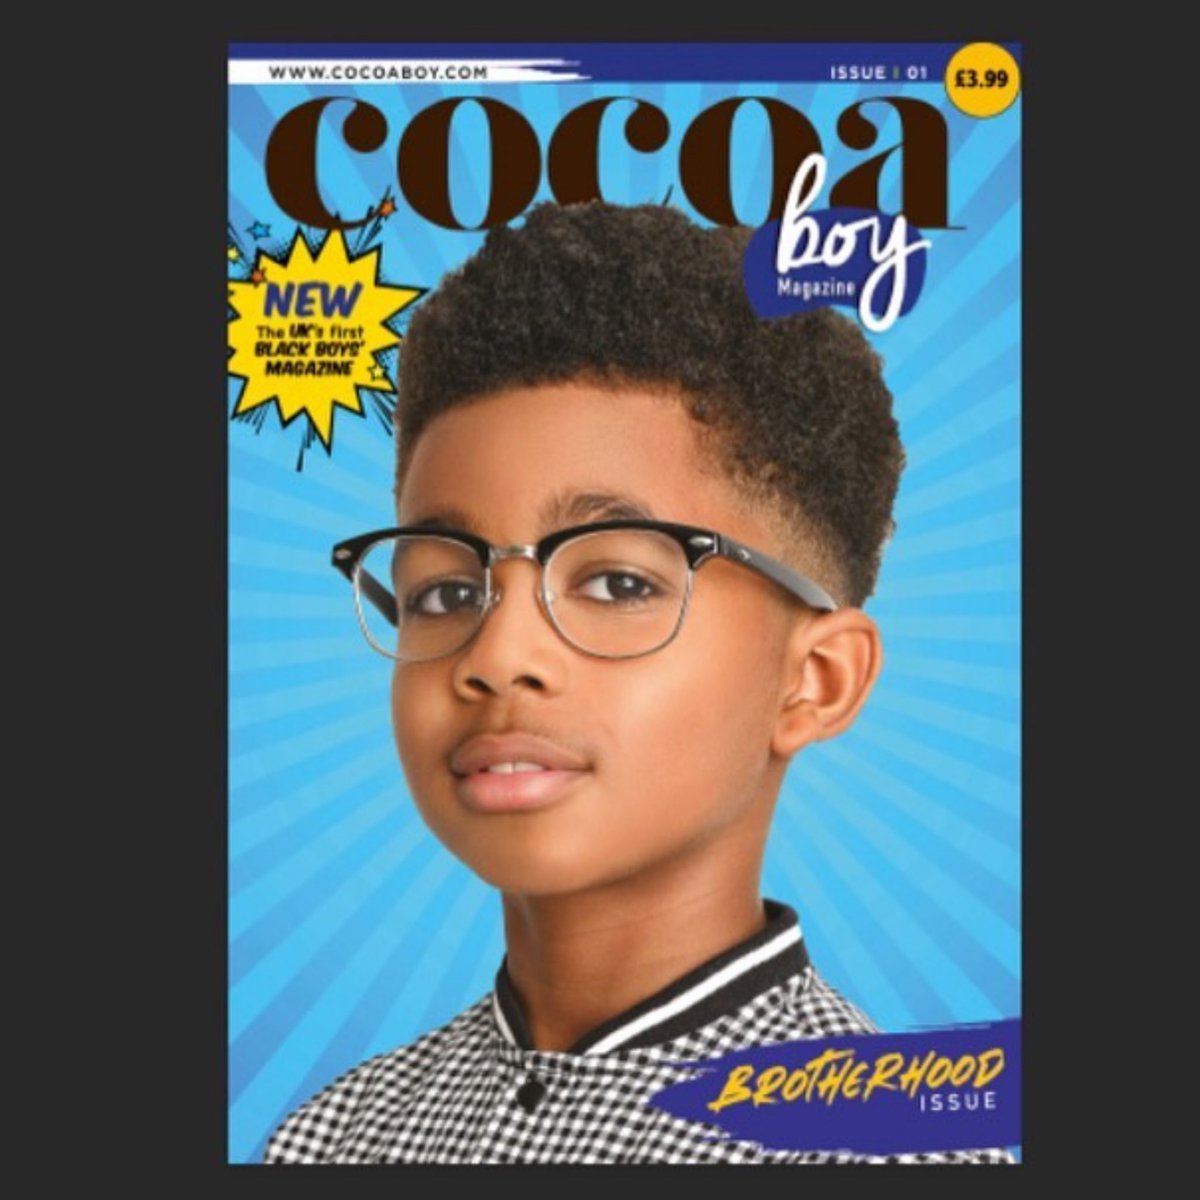 🛍: @cocoaboymag 🧾: The UK’s first Black boys’ magazine 📍: United Kingdom instagram.com/cocoaboymag?ig… #BuyItBlackOwned